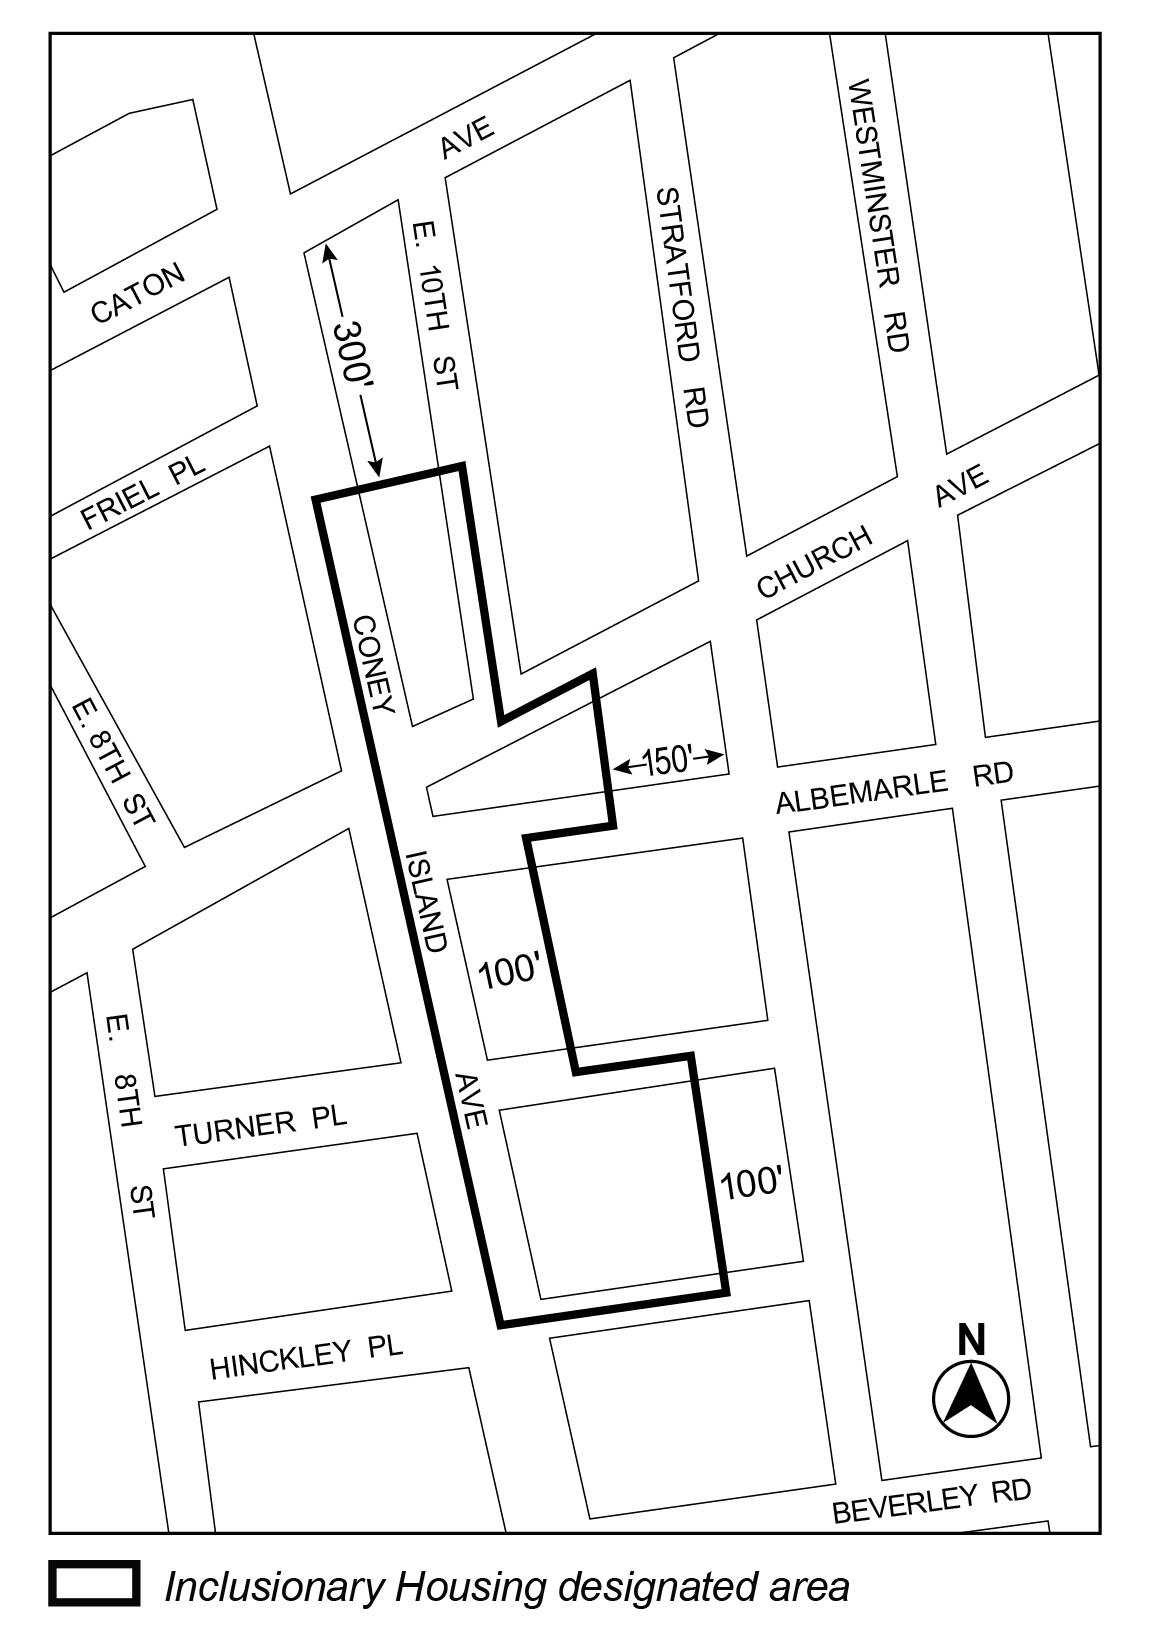 APPENDIX F, Brooklyn CD 14, Map 1, IHda, adopted 29 July, 2009